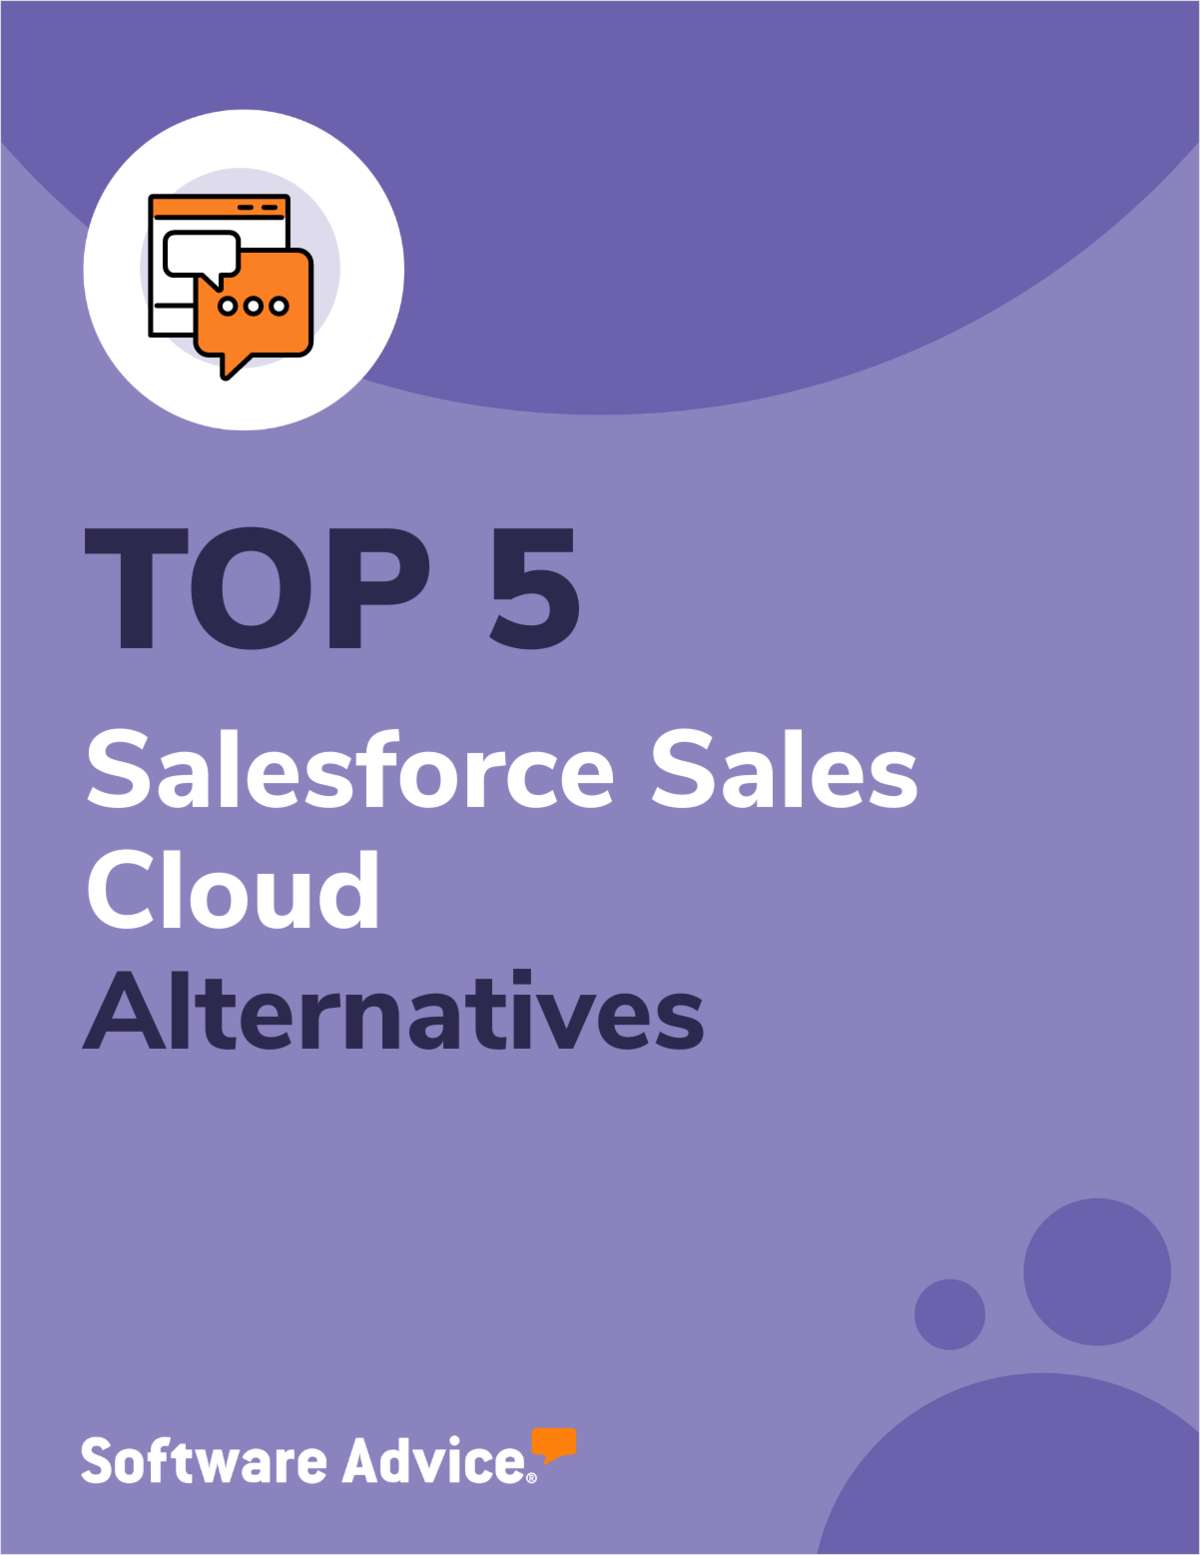 Top 5 Salesforce Sales Cloud Alternatives